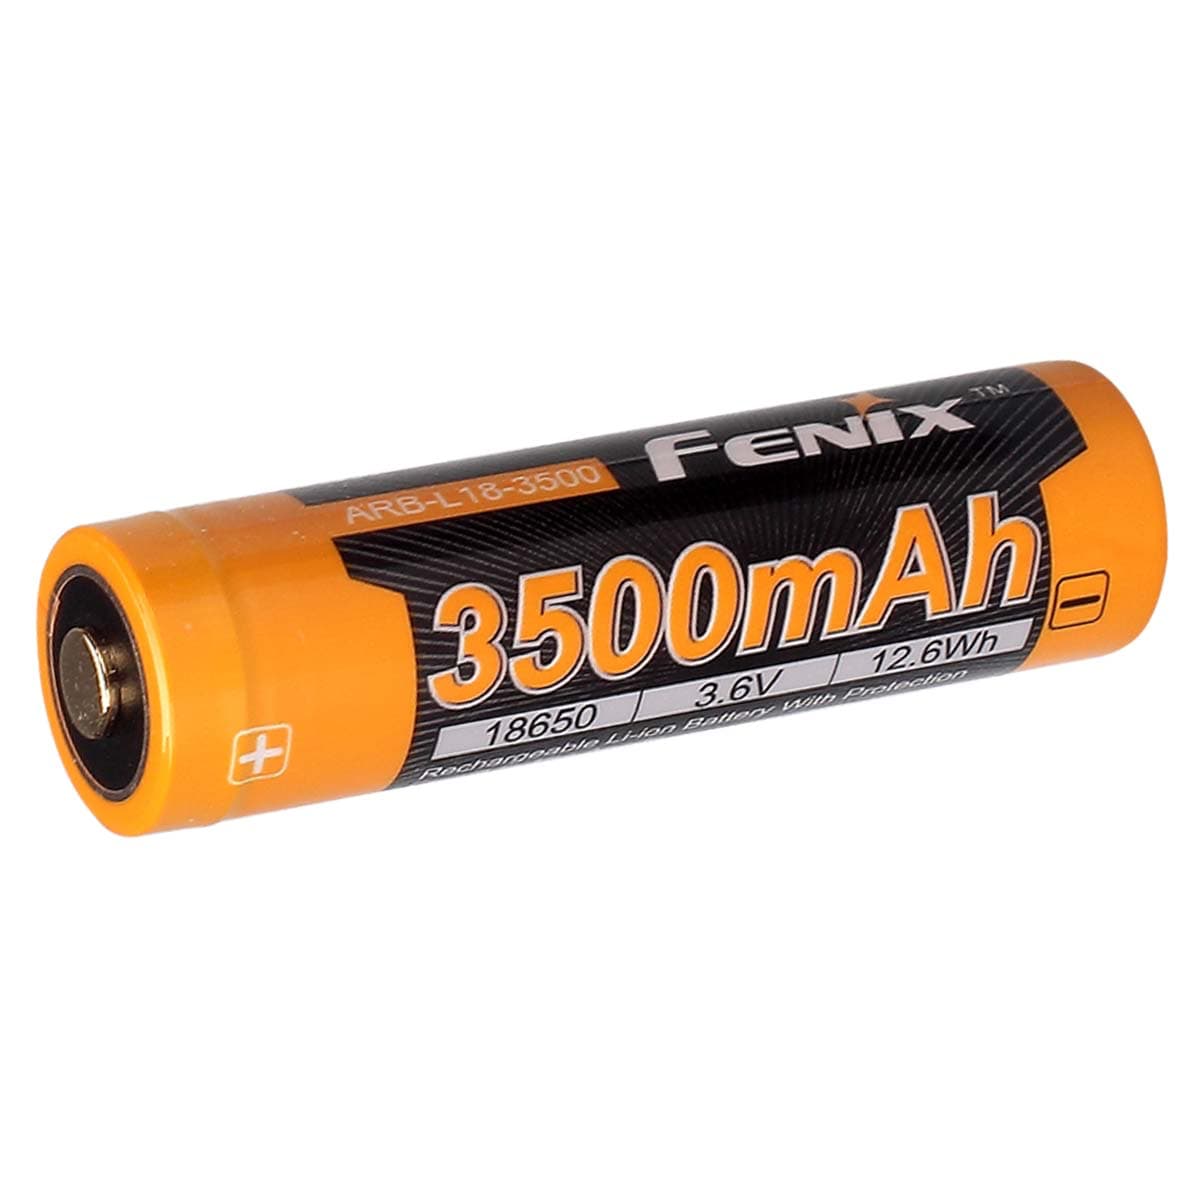 Fenix 3500 mAh Rechargeable 18650 Li-ion Battery